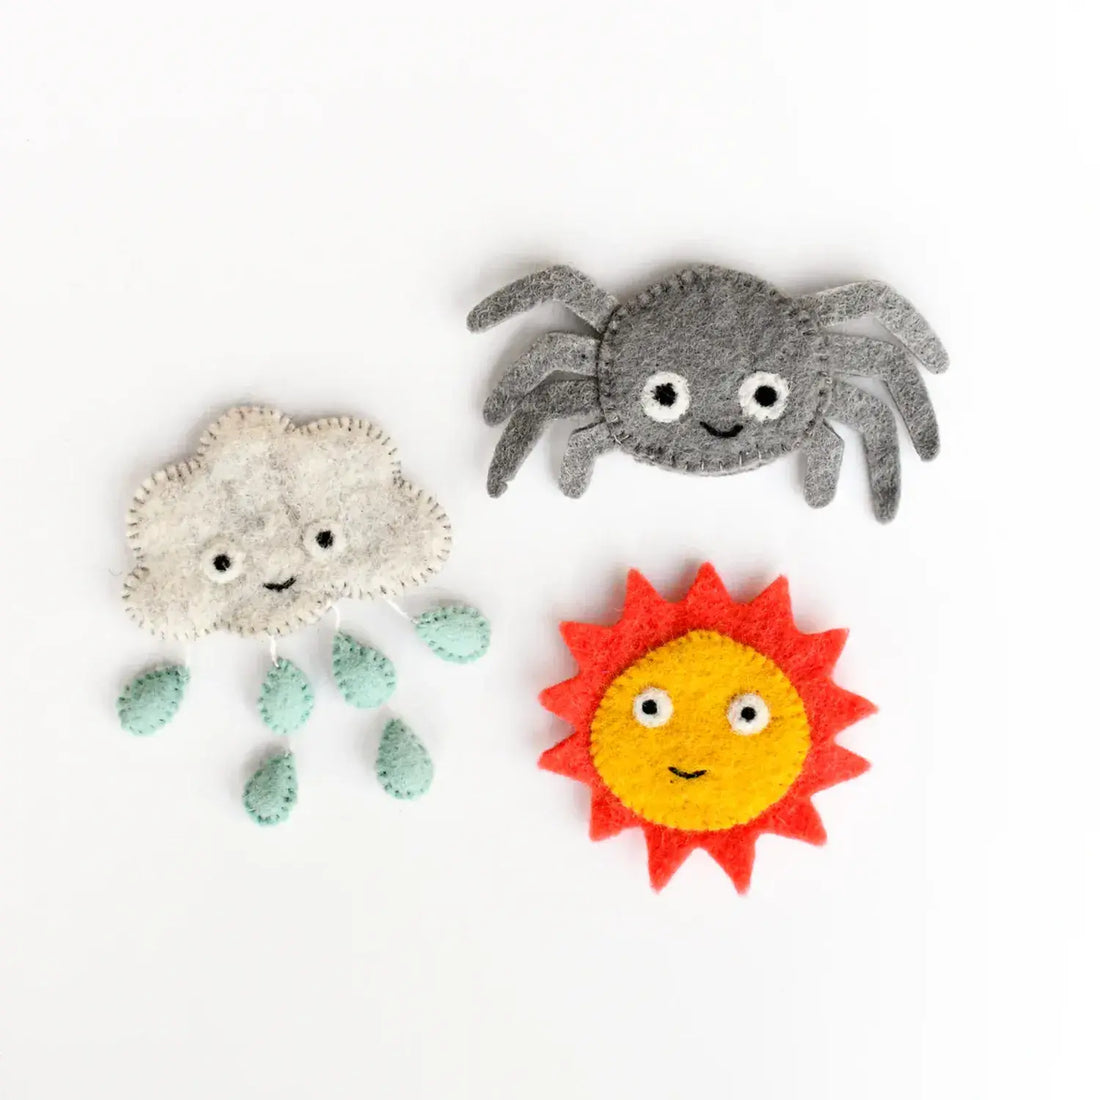 Incy Wincy Spider Finger Puppet Set by Tara Treasures